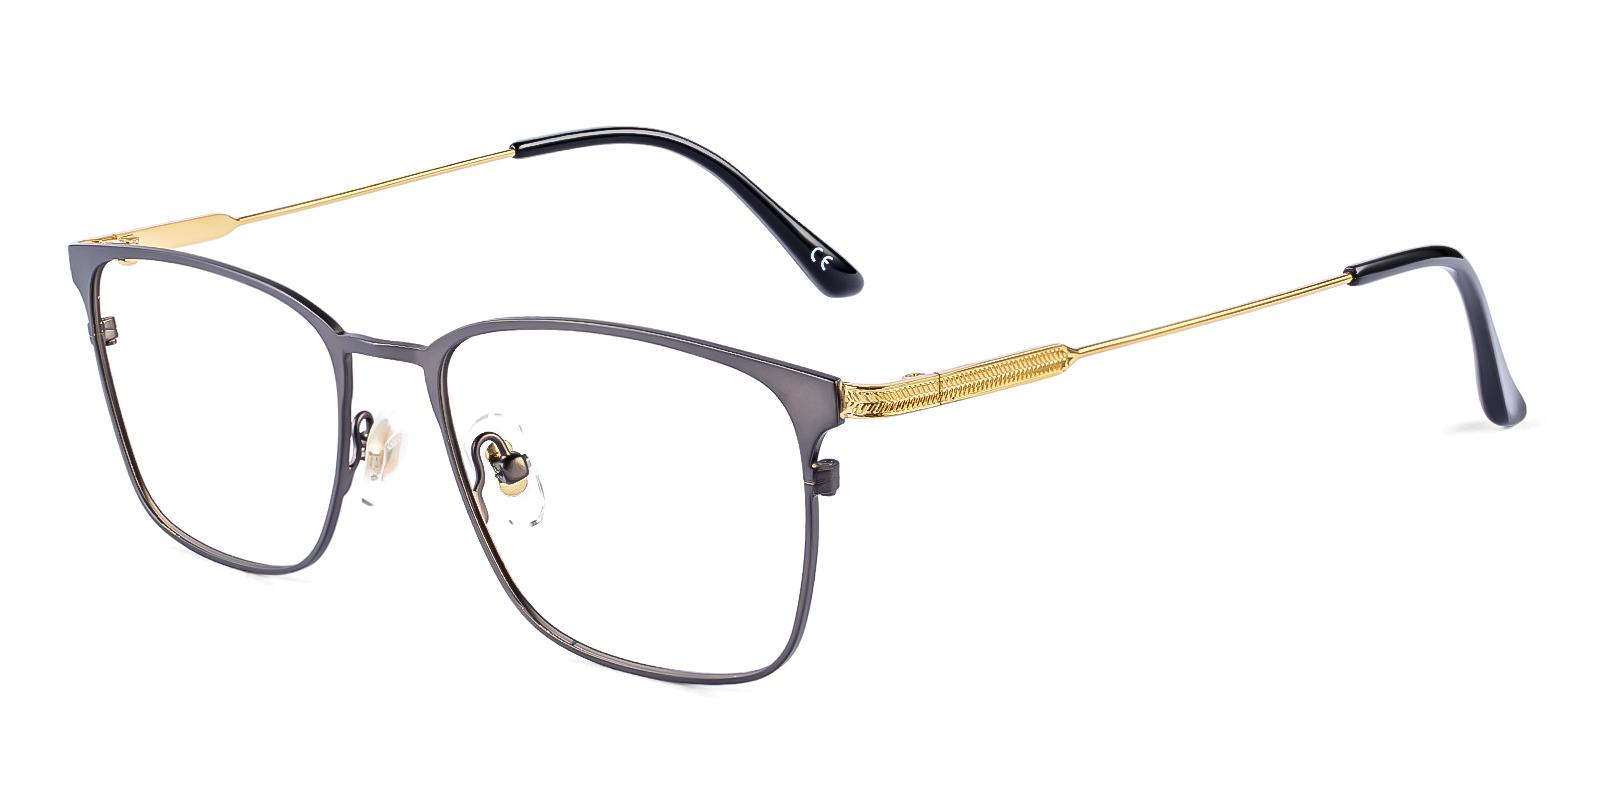 Cerat Gold Metal Eyeglasses , NosePads Frames from ABBE Glasses